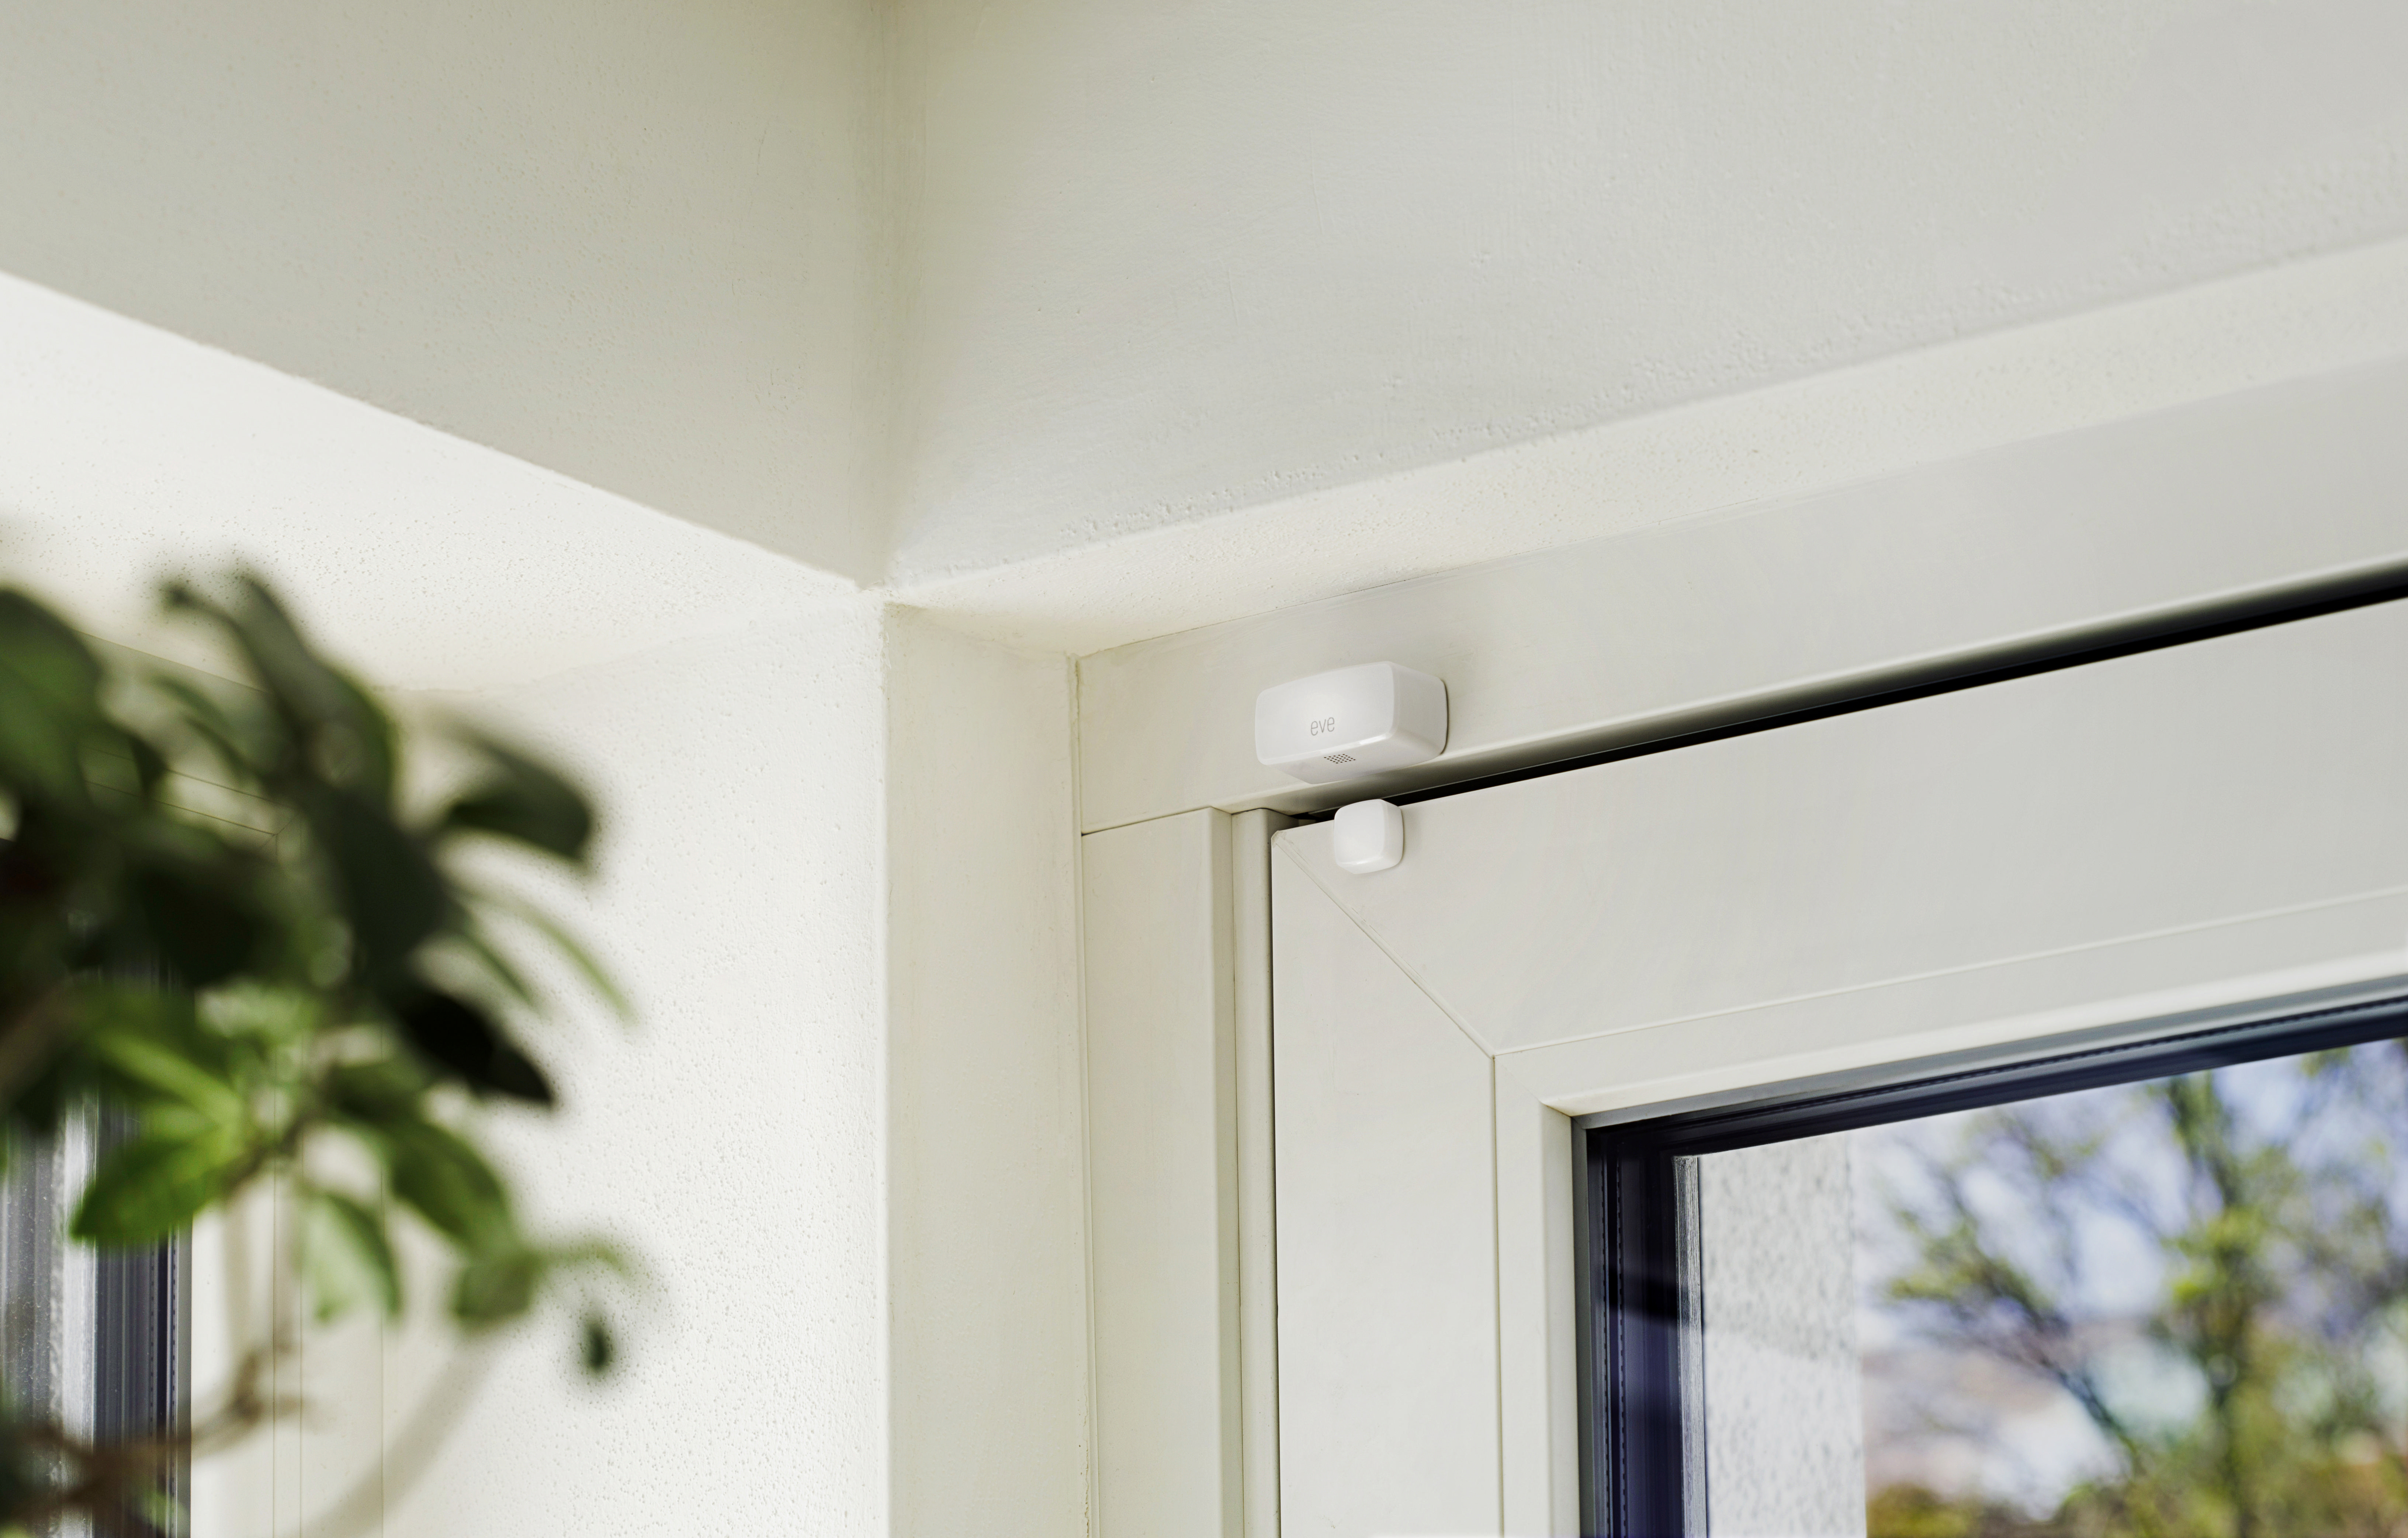 EVE Door & Window Tür- Weiß Fernsterkontaktsensor, und